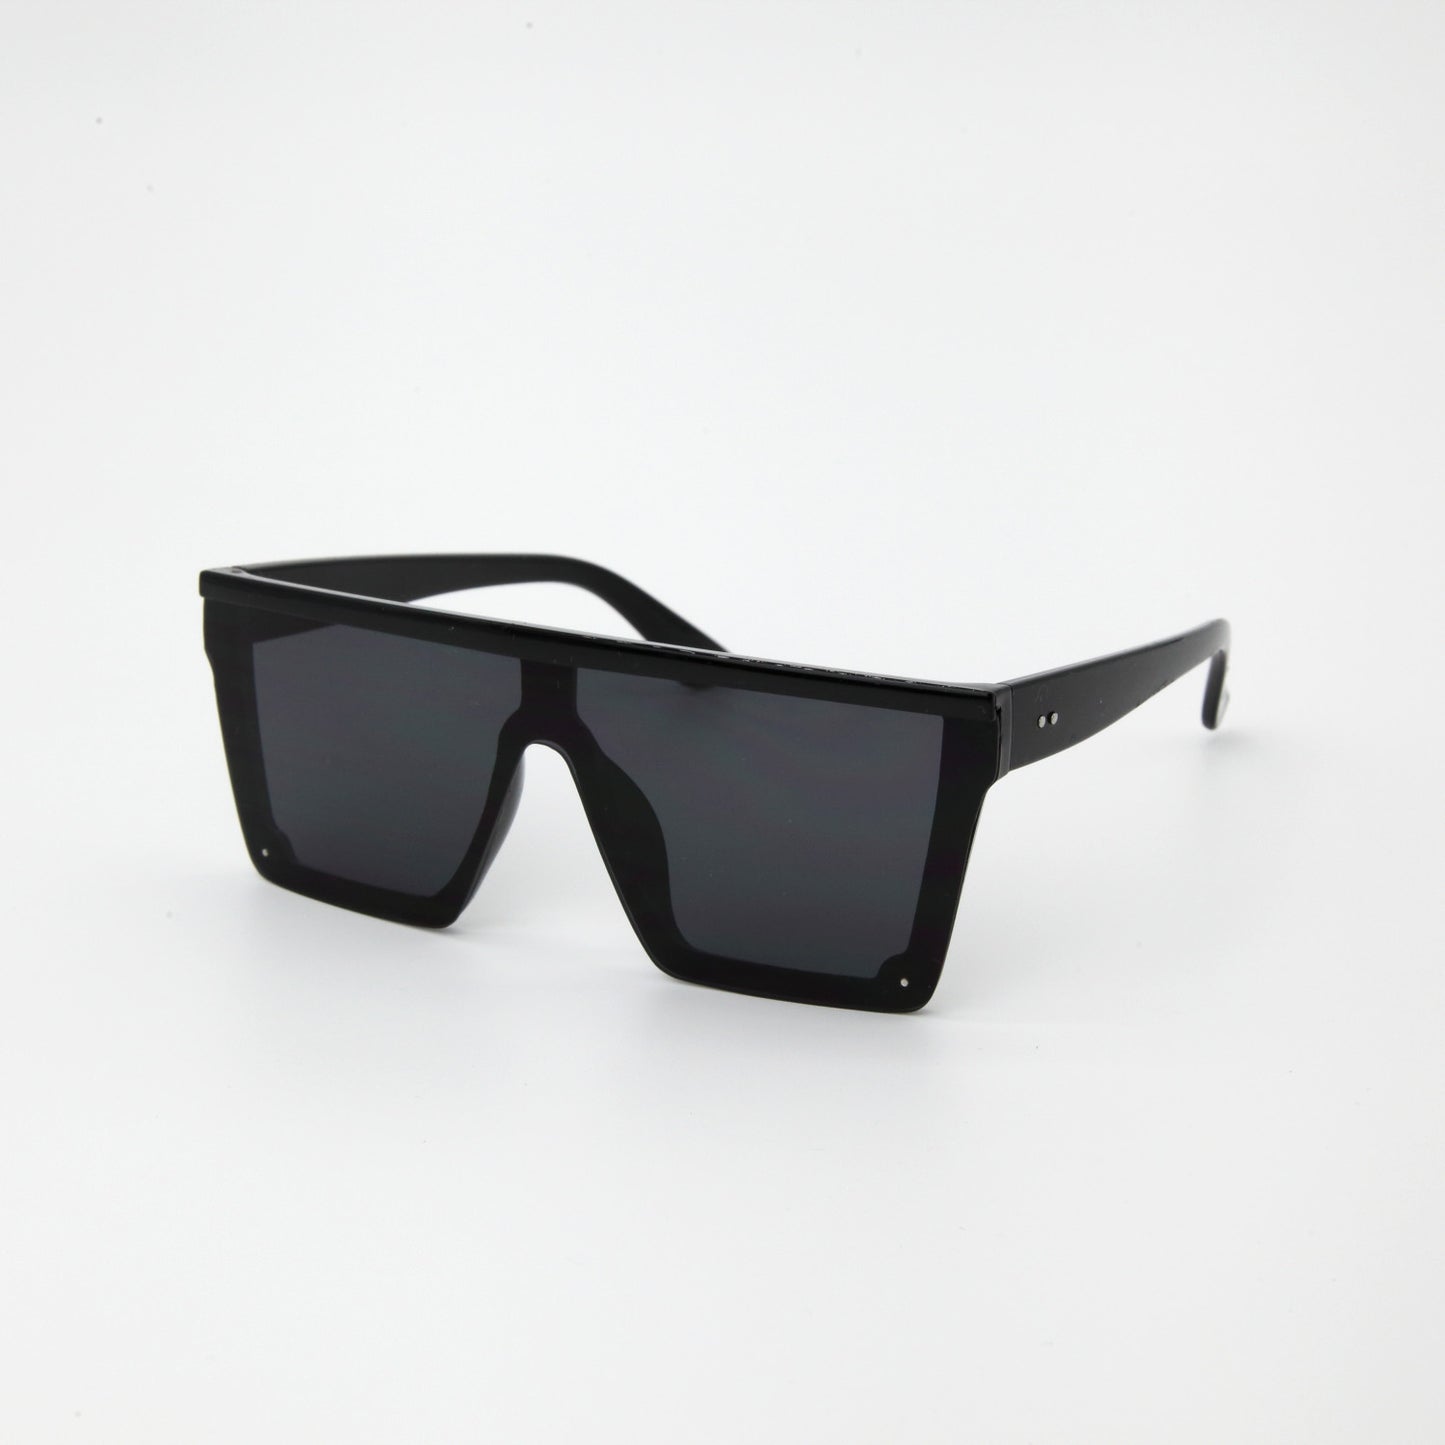 Parker Sunglasses in Black